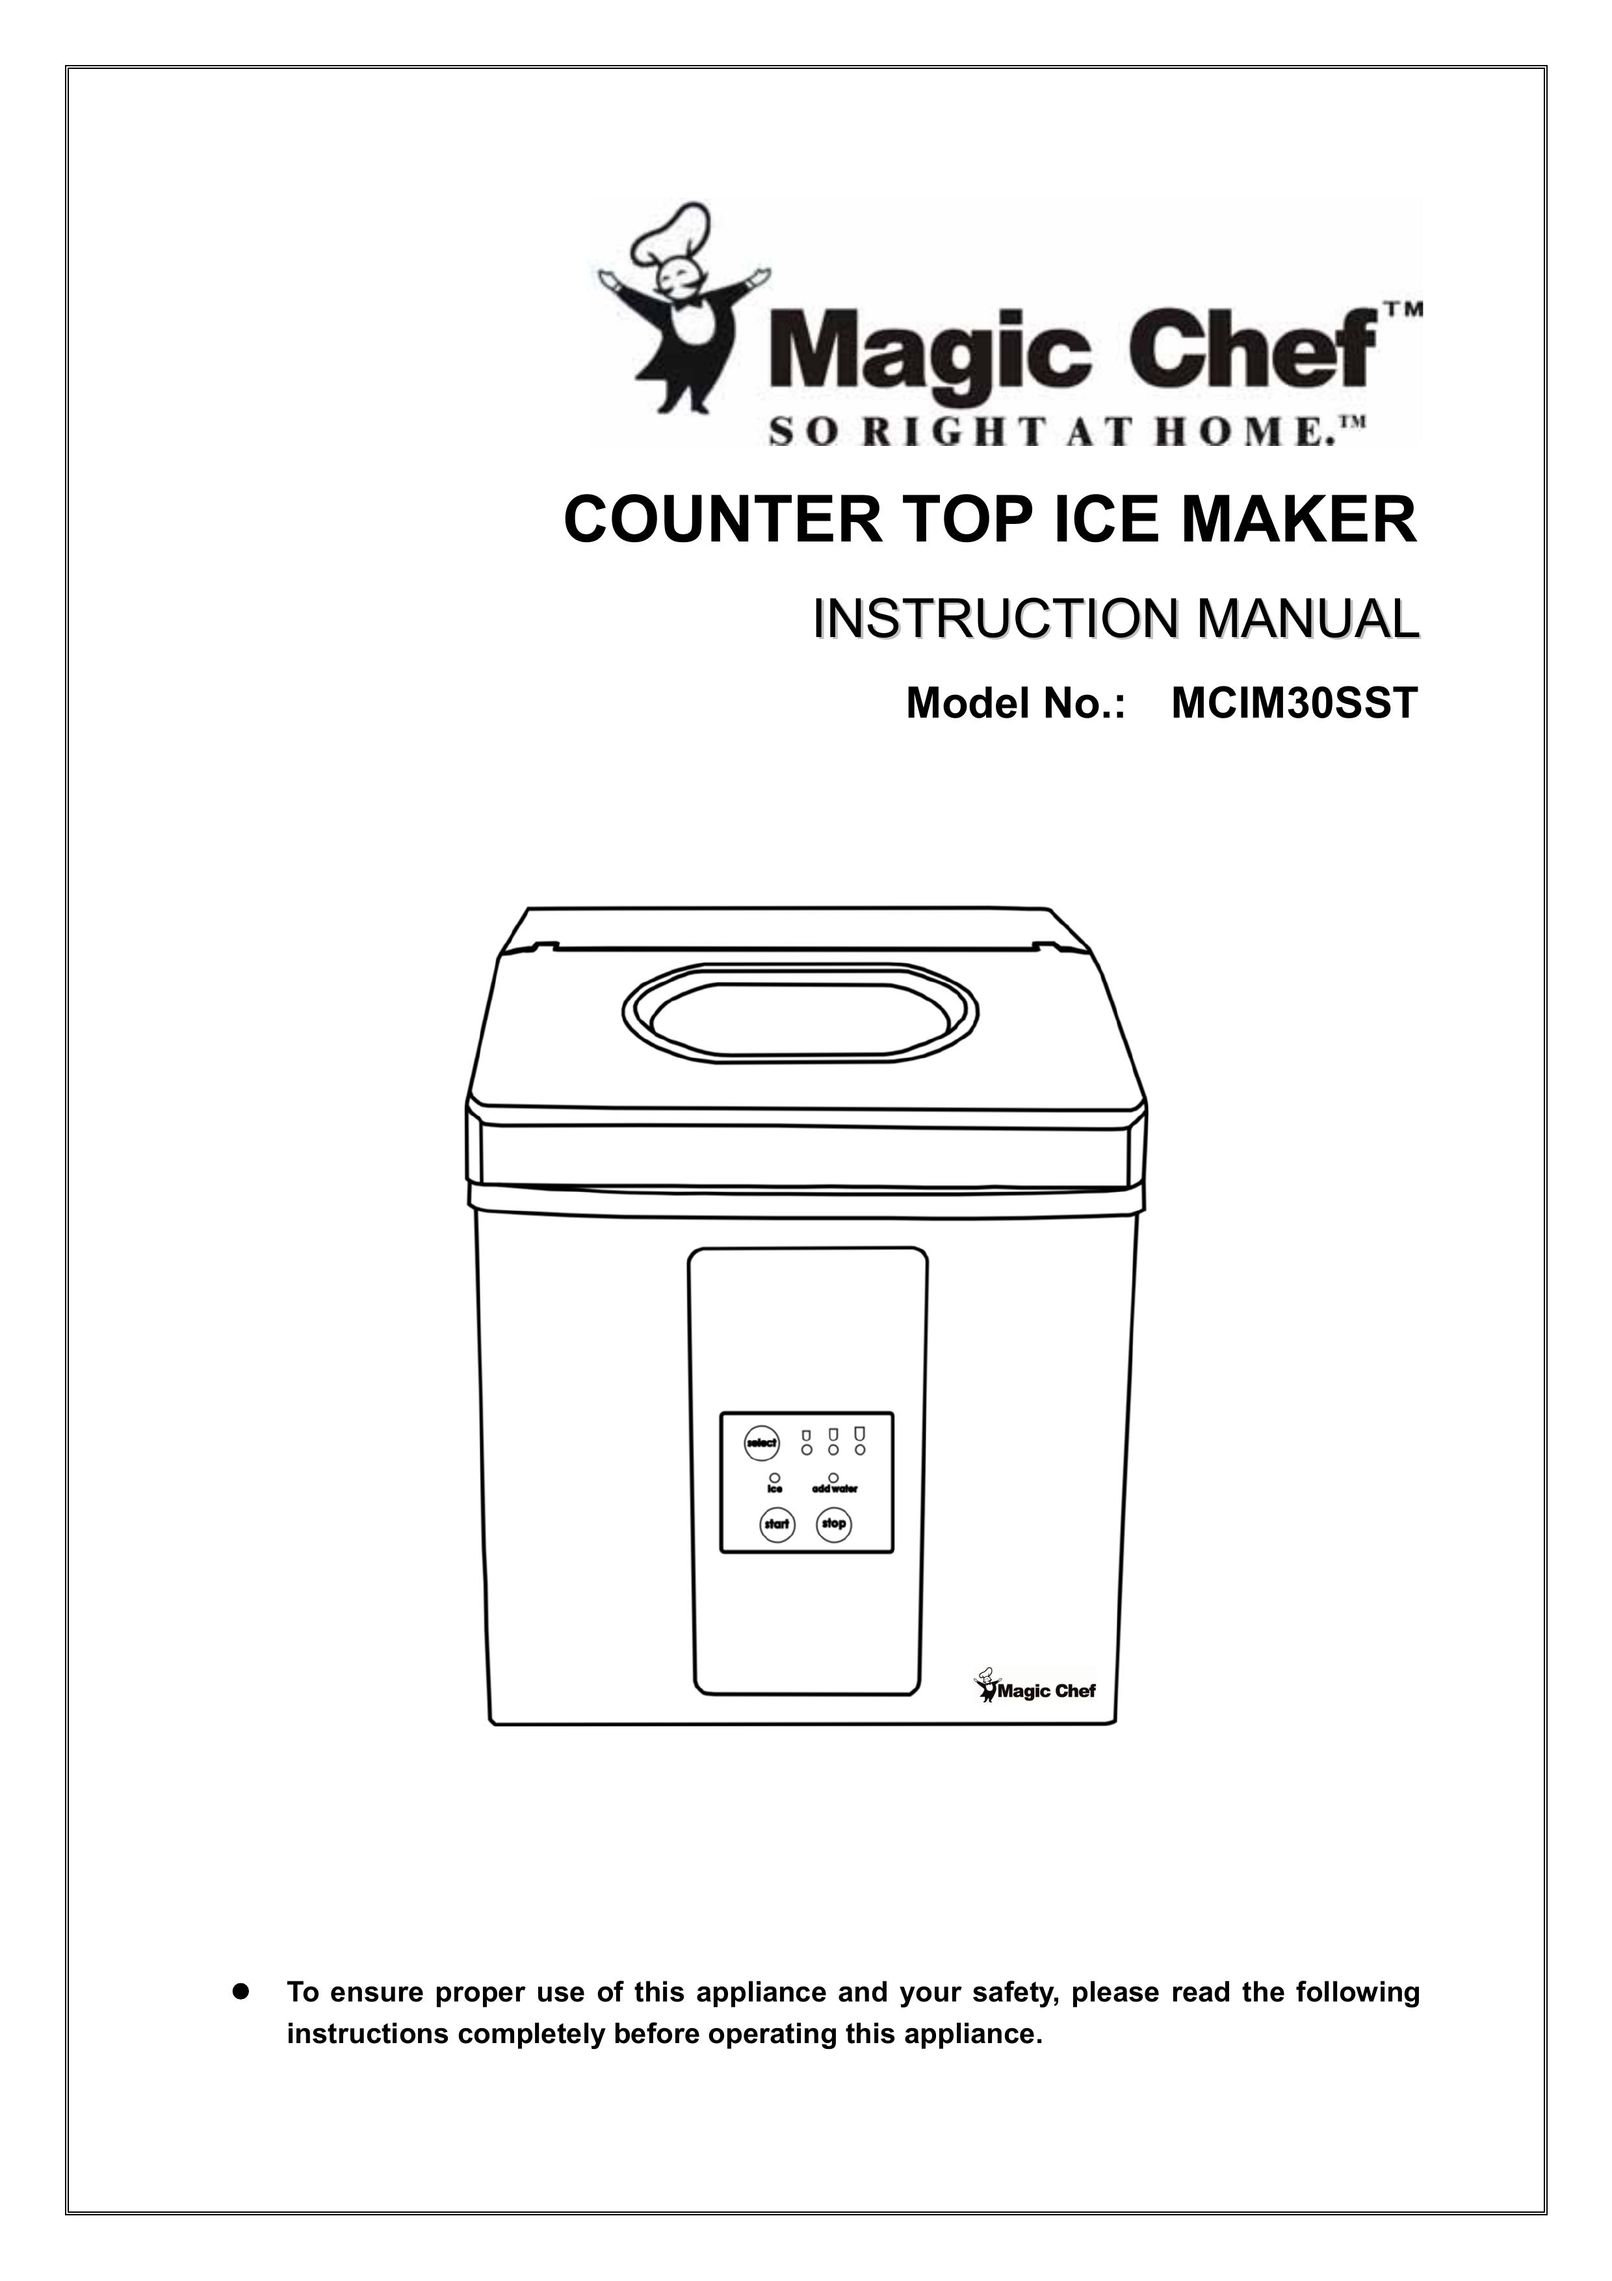 Magic Chef MCIM30SST Ice Maker User Manual